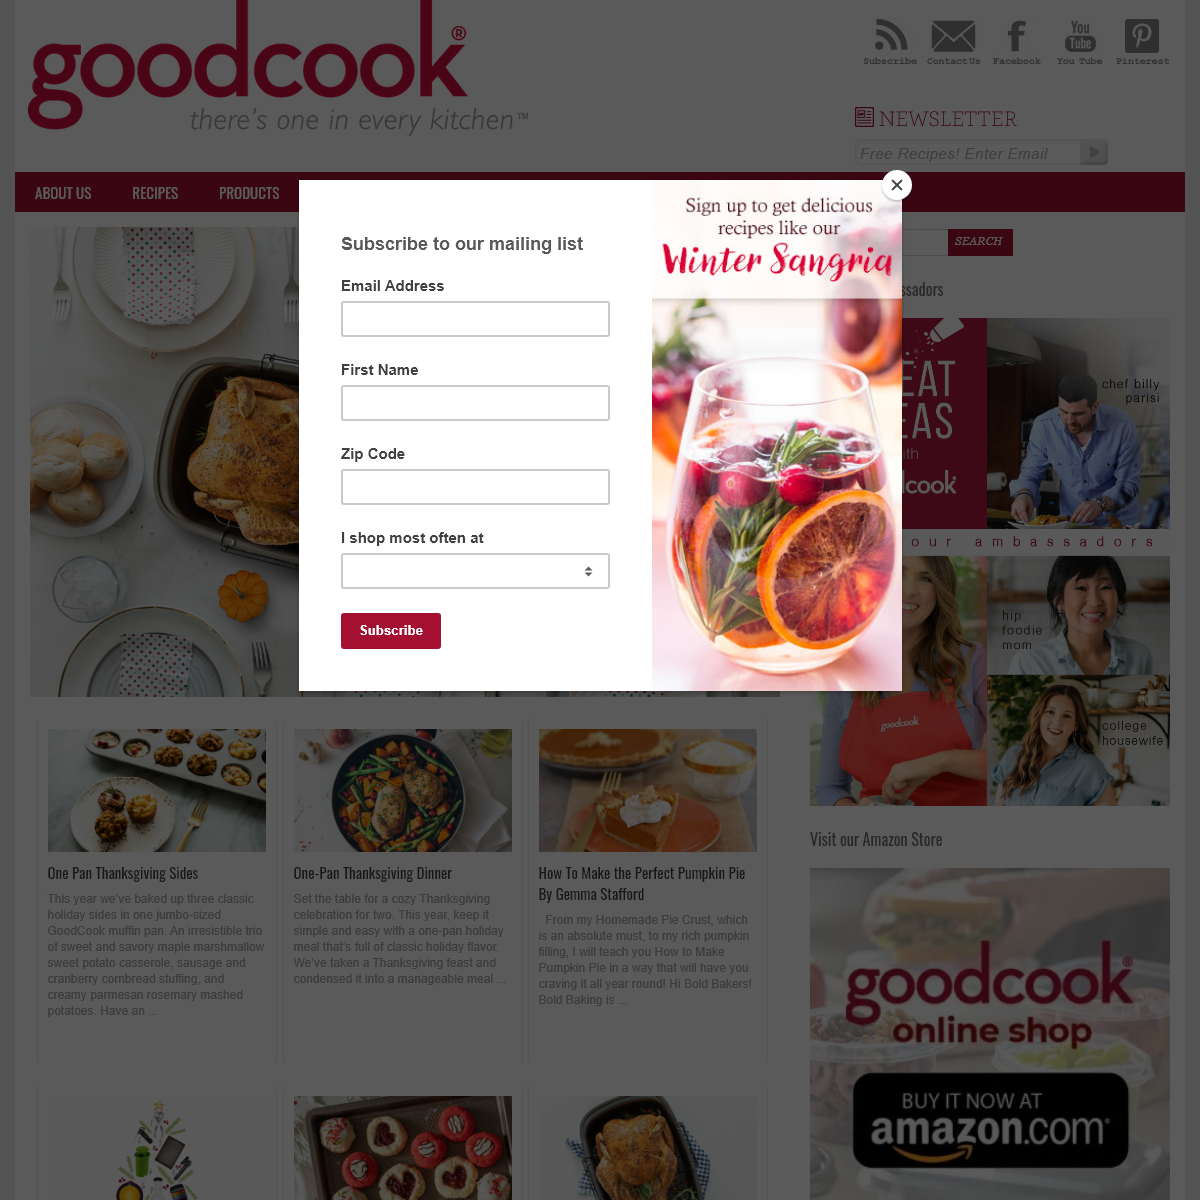 A complete backup of goodcook.com